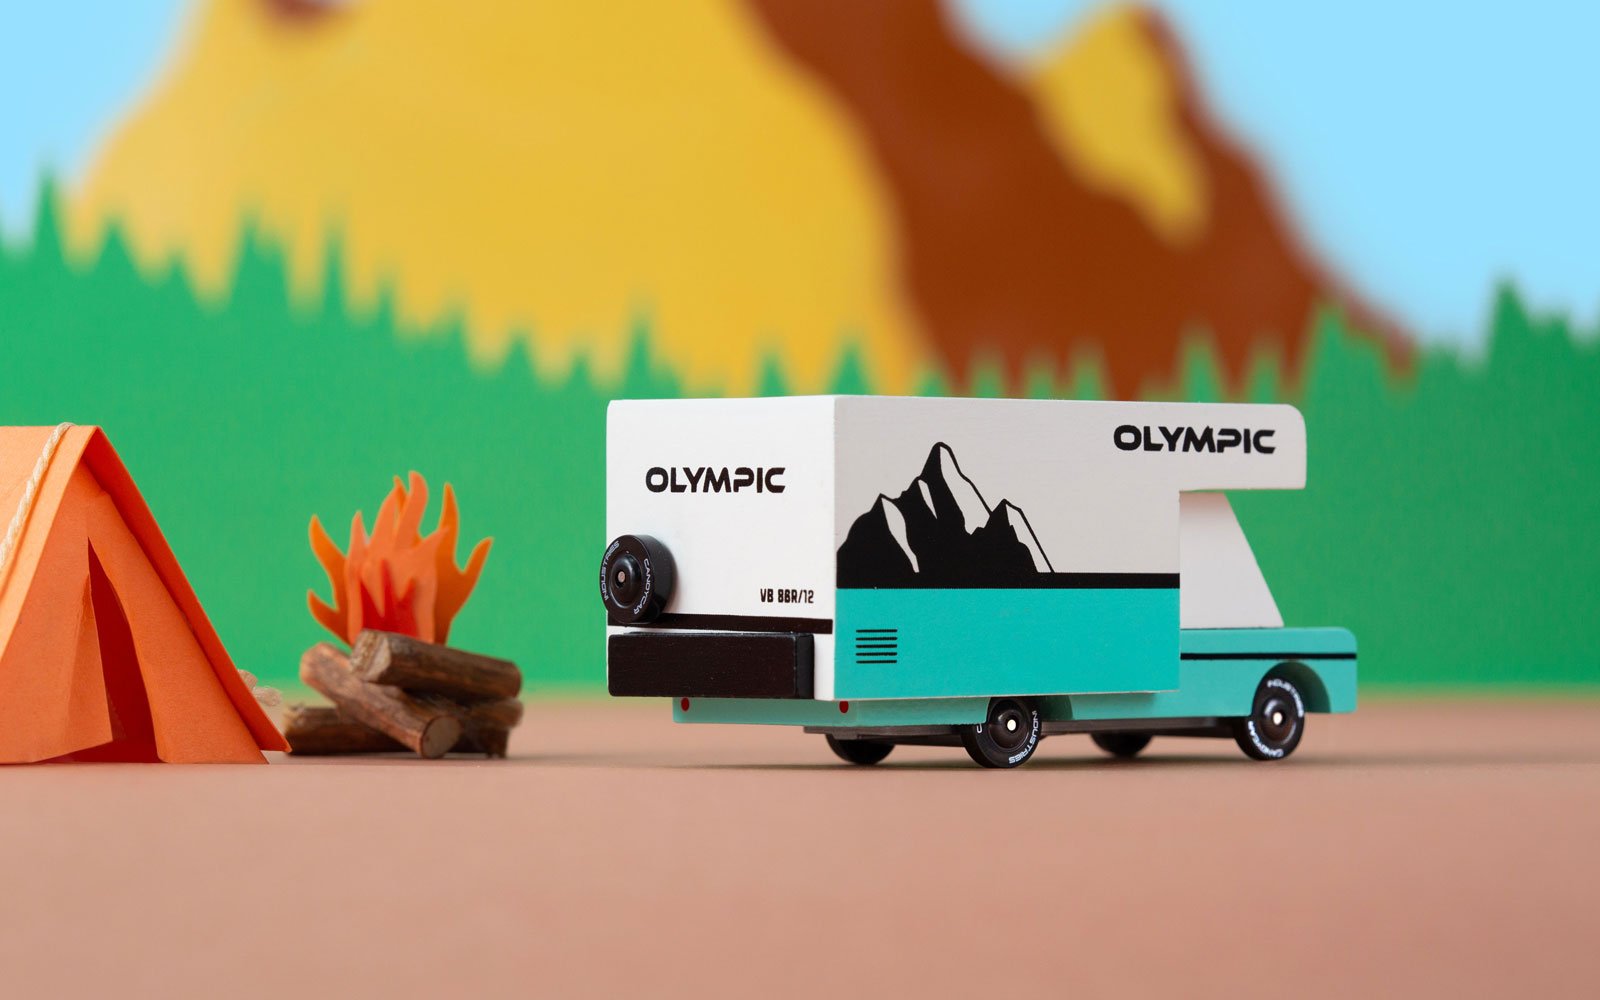 Candycar de camping-car olympique